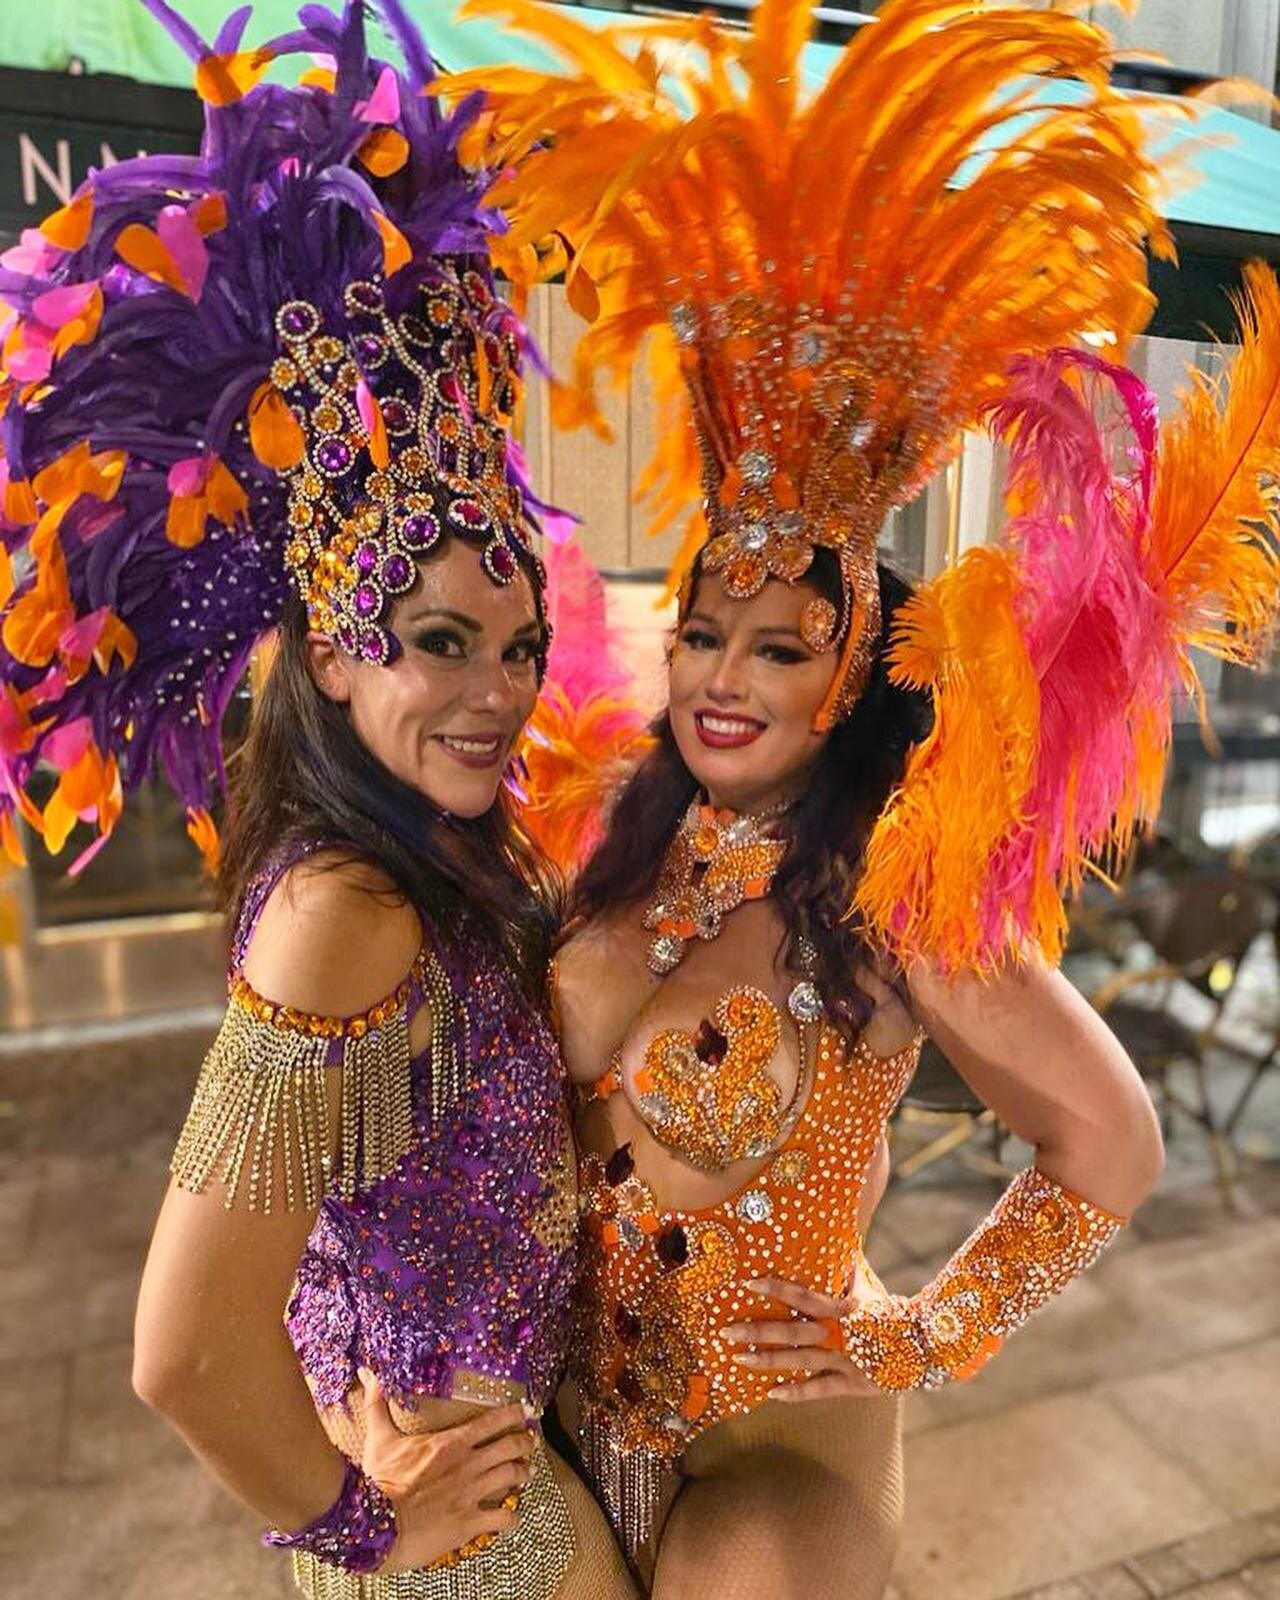 We love to work with other dancers and lastnight we had this beauty joining us at @cuisinelegrand 💜

#dancaglobal #samba #sambadancers #sambacostume #cuisinelegrand #stockholmnightlife